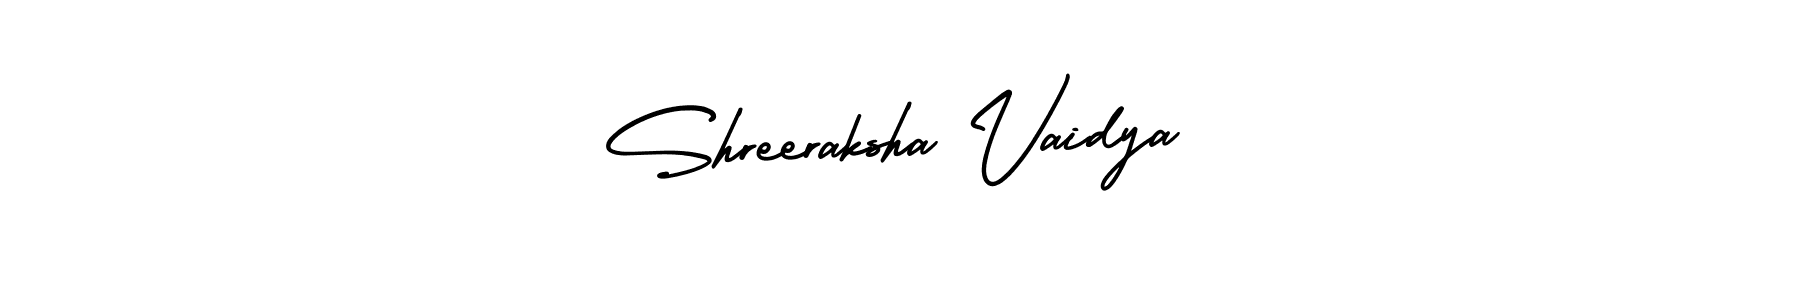 Make a beautiful signature design for name Shreeraksha Vaidya. Use this online signature maker to create a handwritten signature for free. Shreeraksha Vaidya signature style 3 images and pictures png